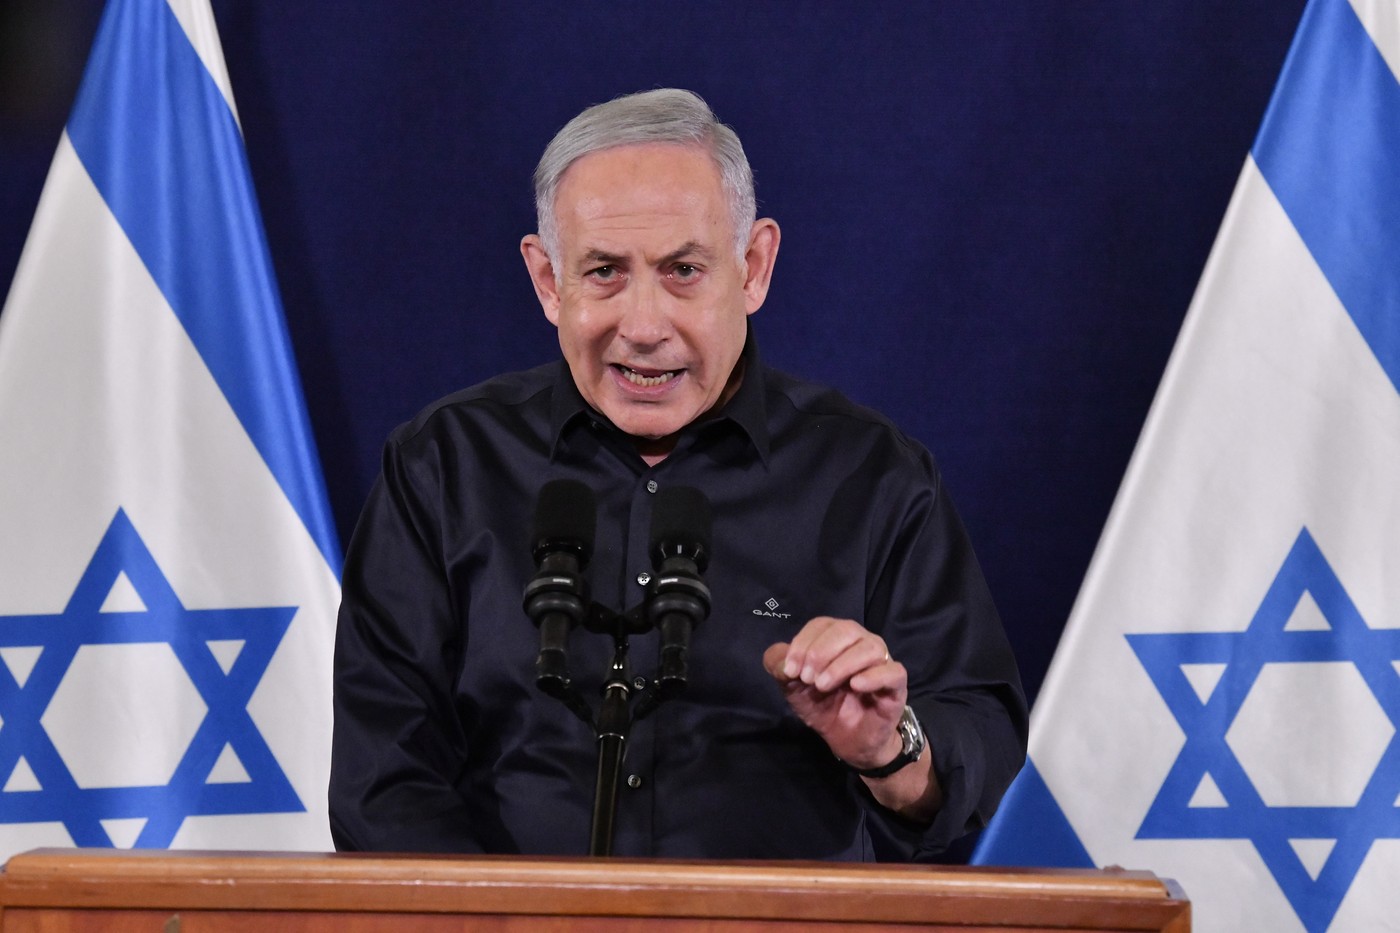 netanyahu-e-„dezgustat”-de-decizia-cpi:-„resping-comparatia-intre-israel-si-ucigasii-in-masa-din-hamas”